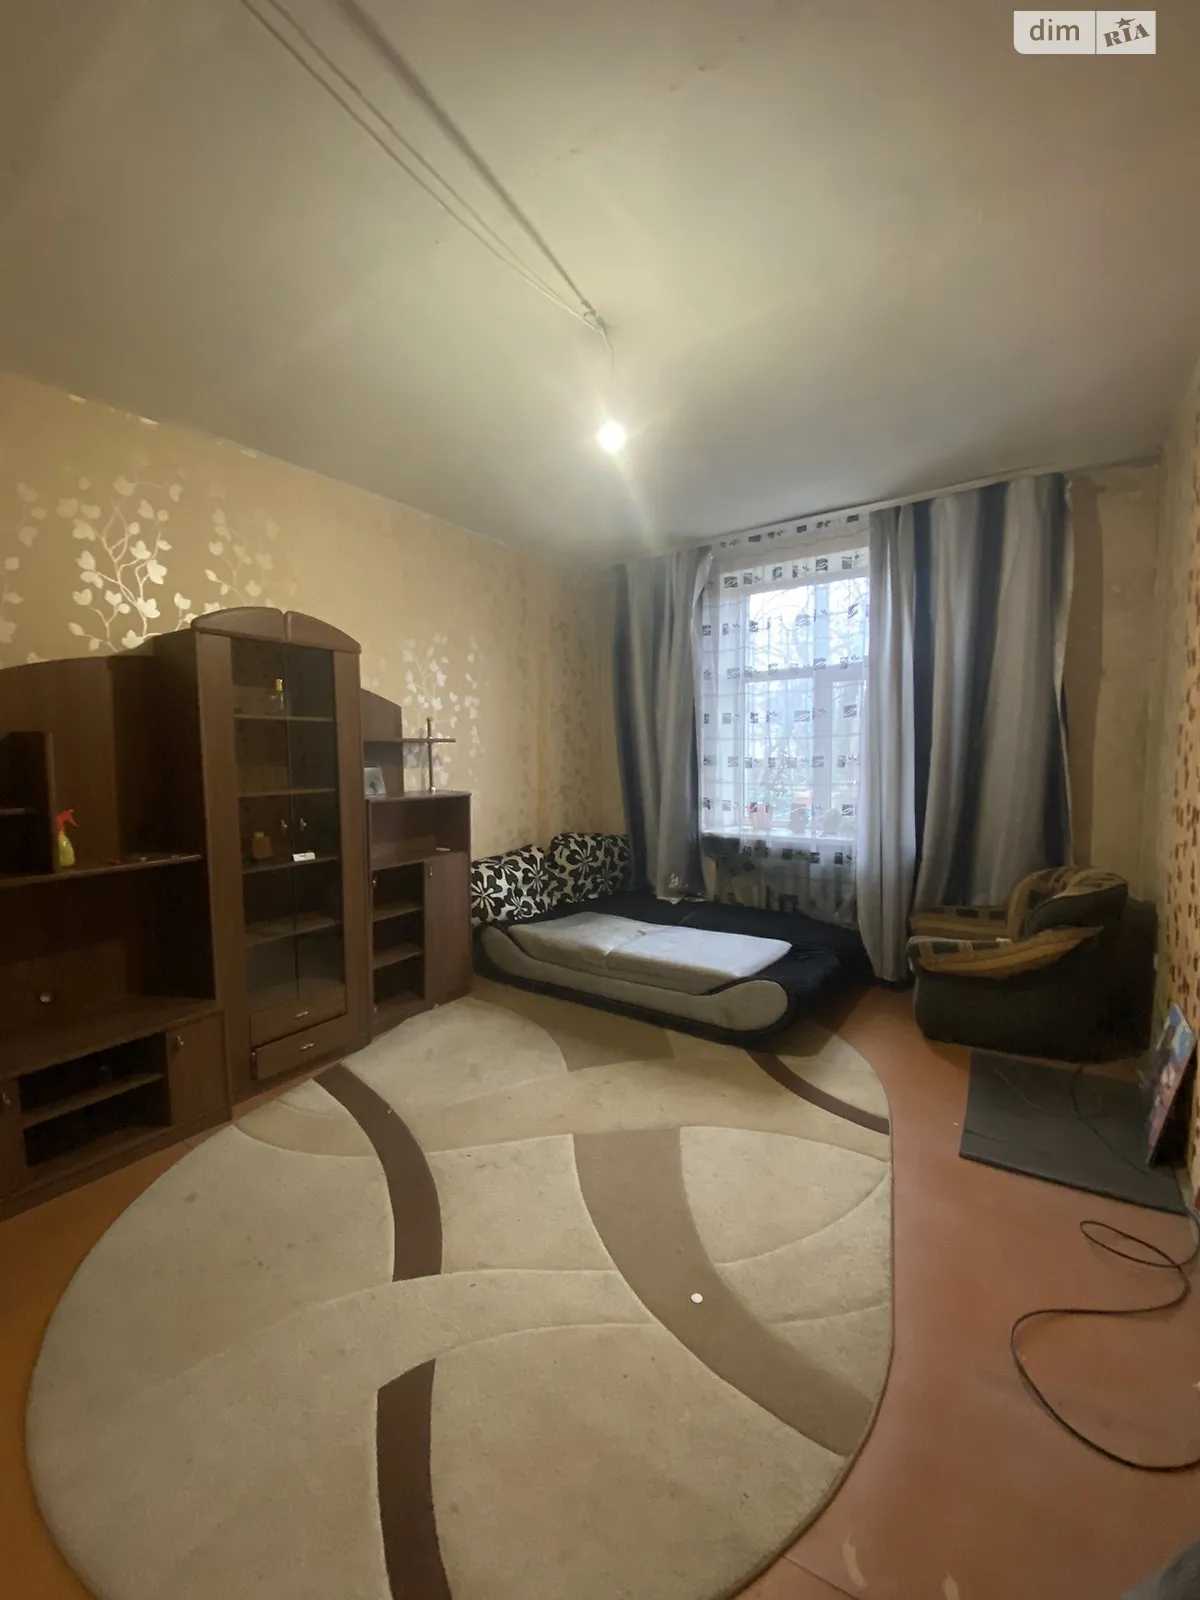 Продается комната 19.3 кв. м в Одессе, цена: 9800 $ - фото 1